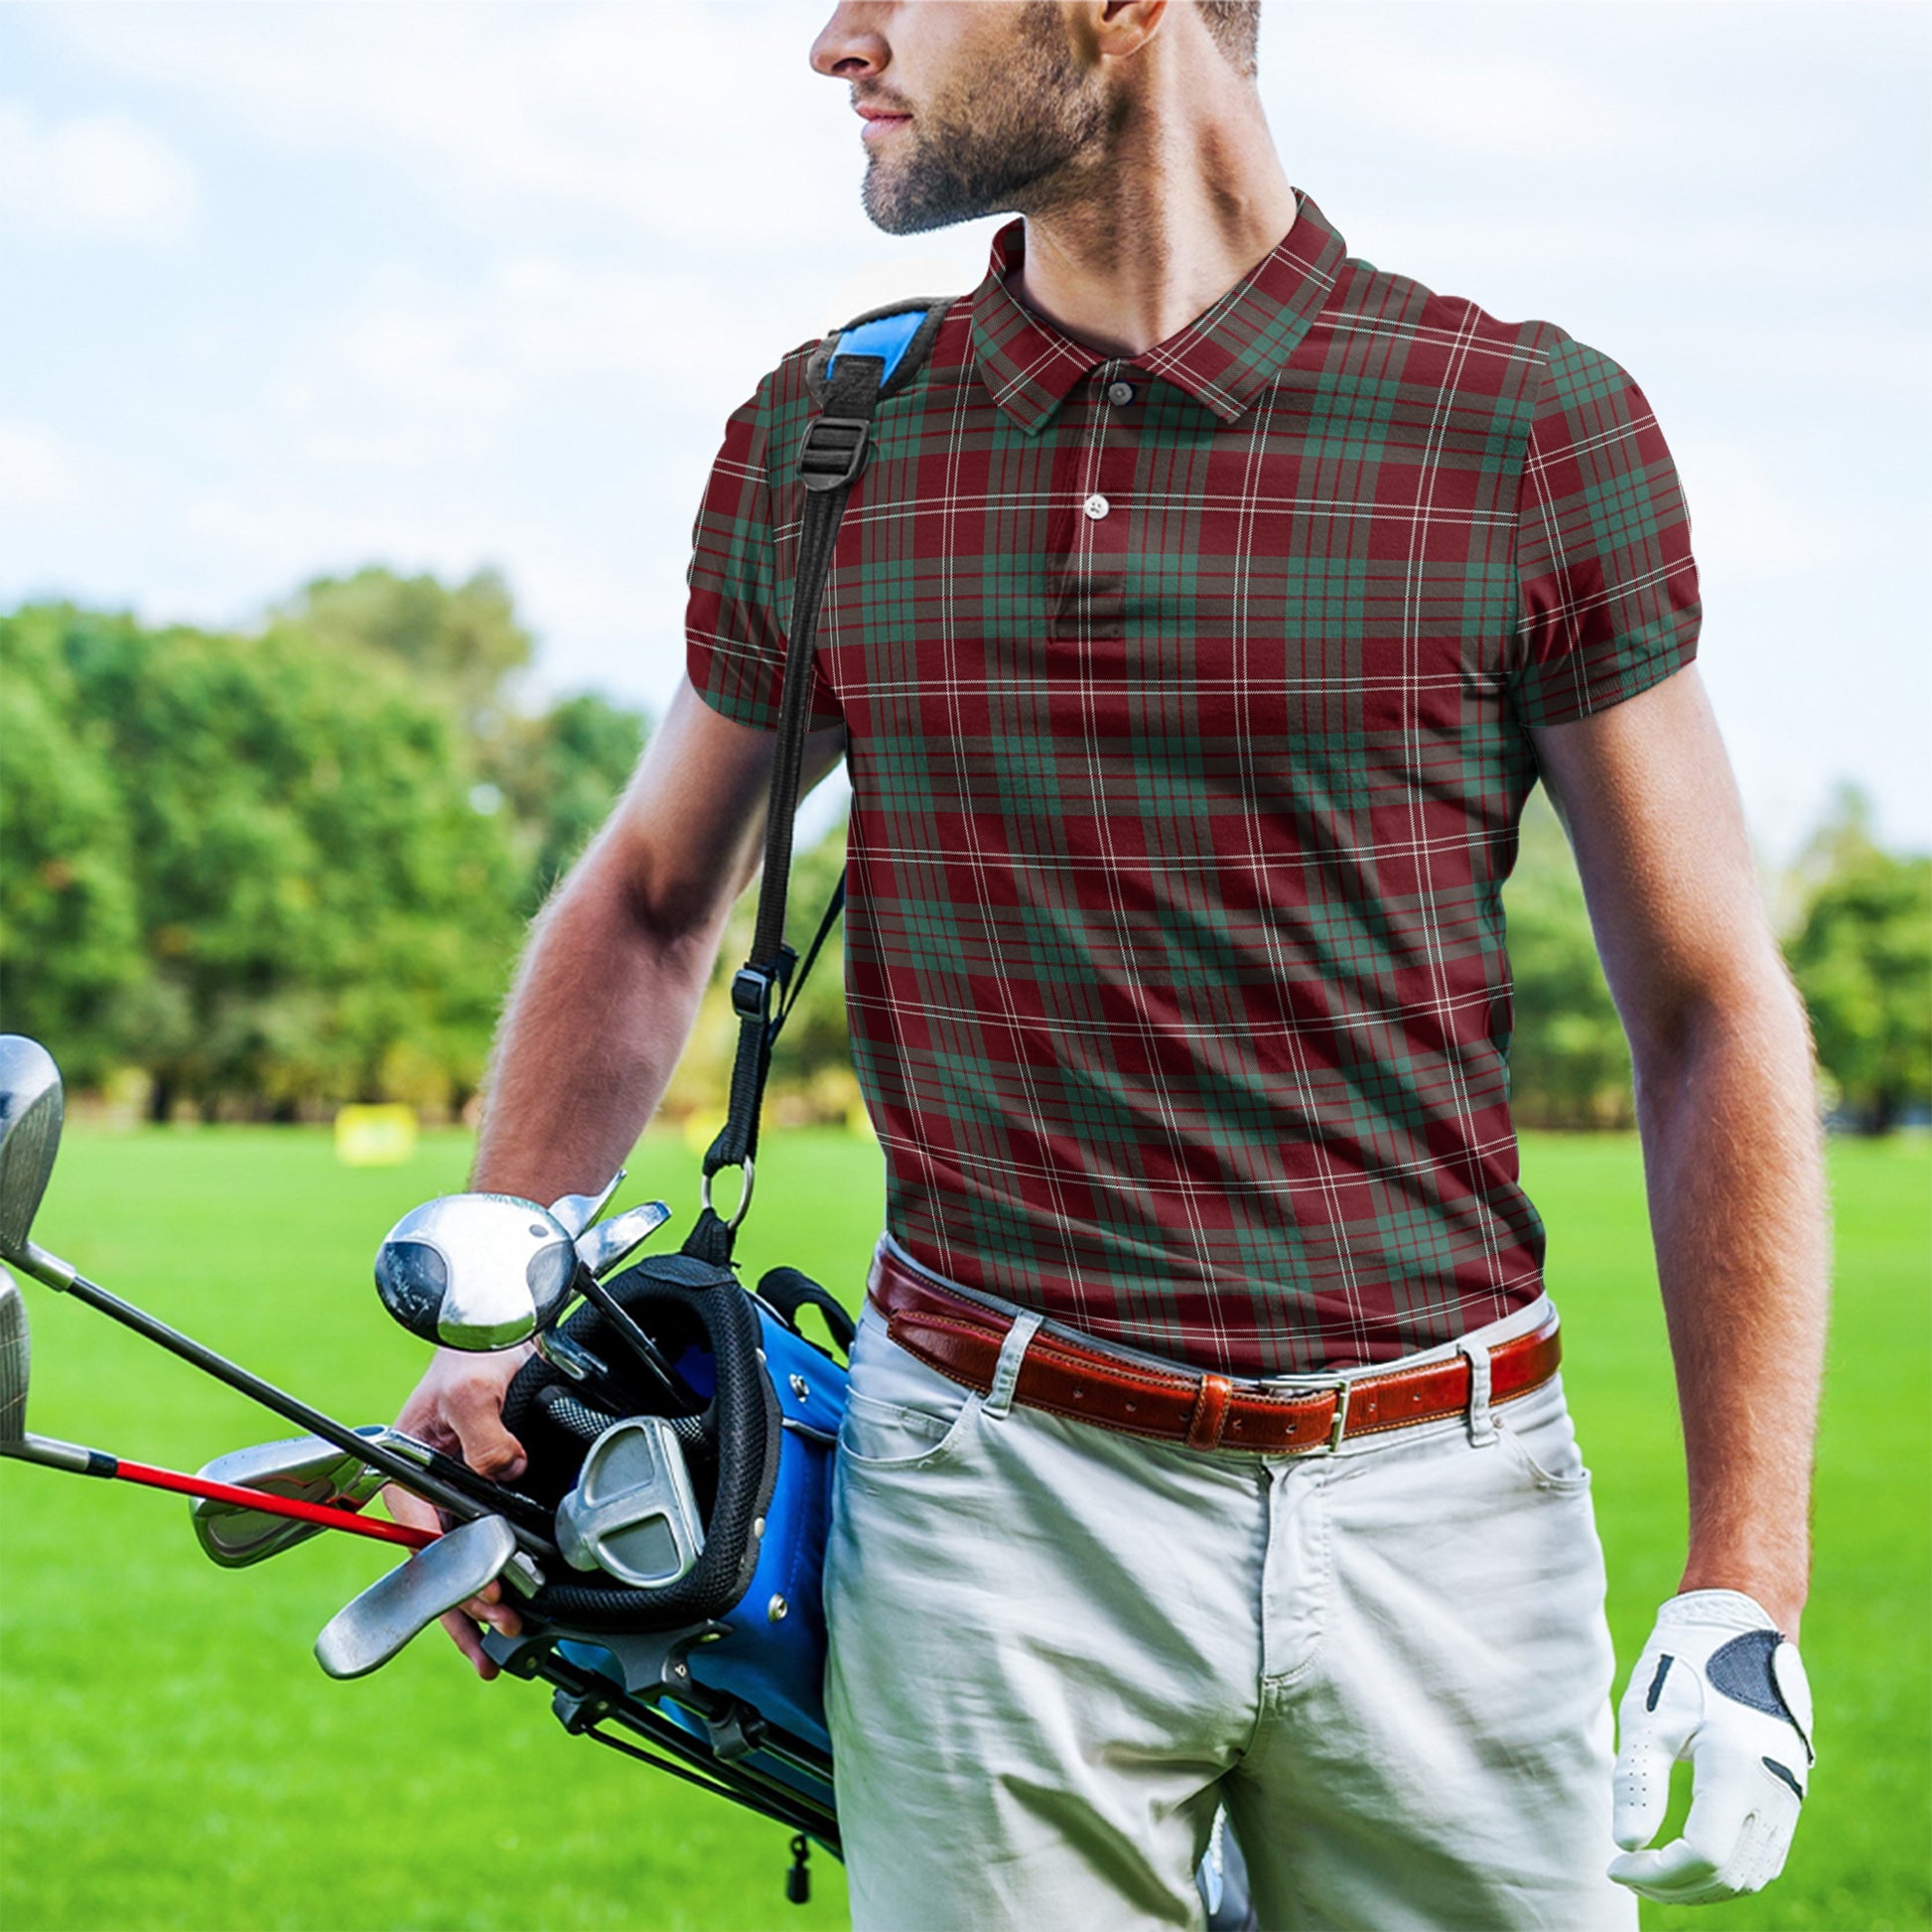 crawford-modern-tartan-mens-polo-shirt-tartan-plaid-men-golf-shirt-scottish-tartan-shirt-for-men